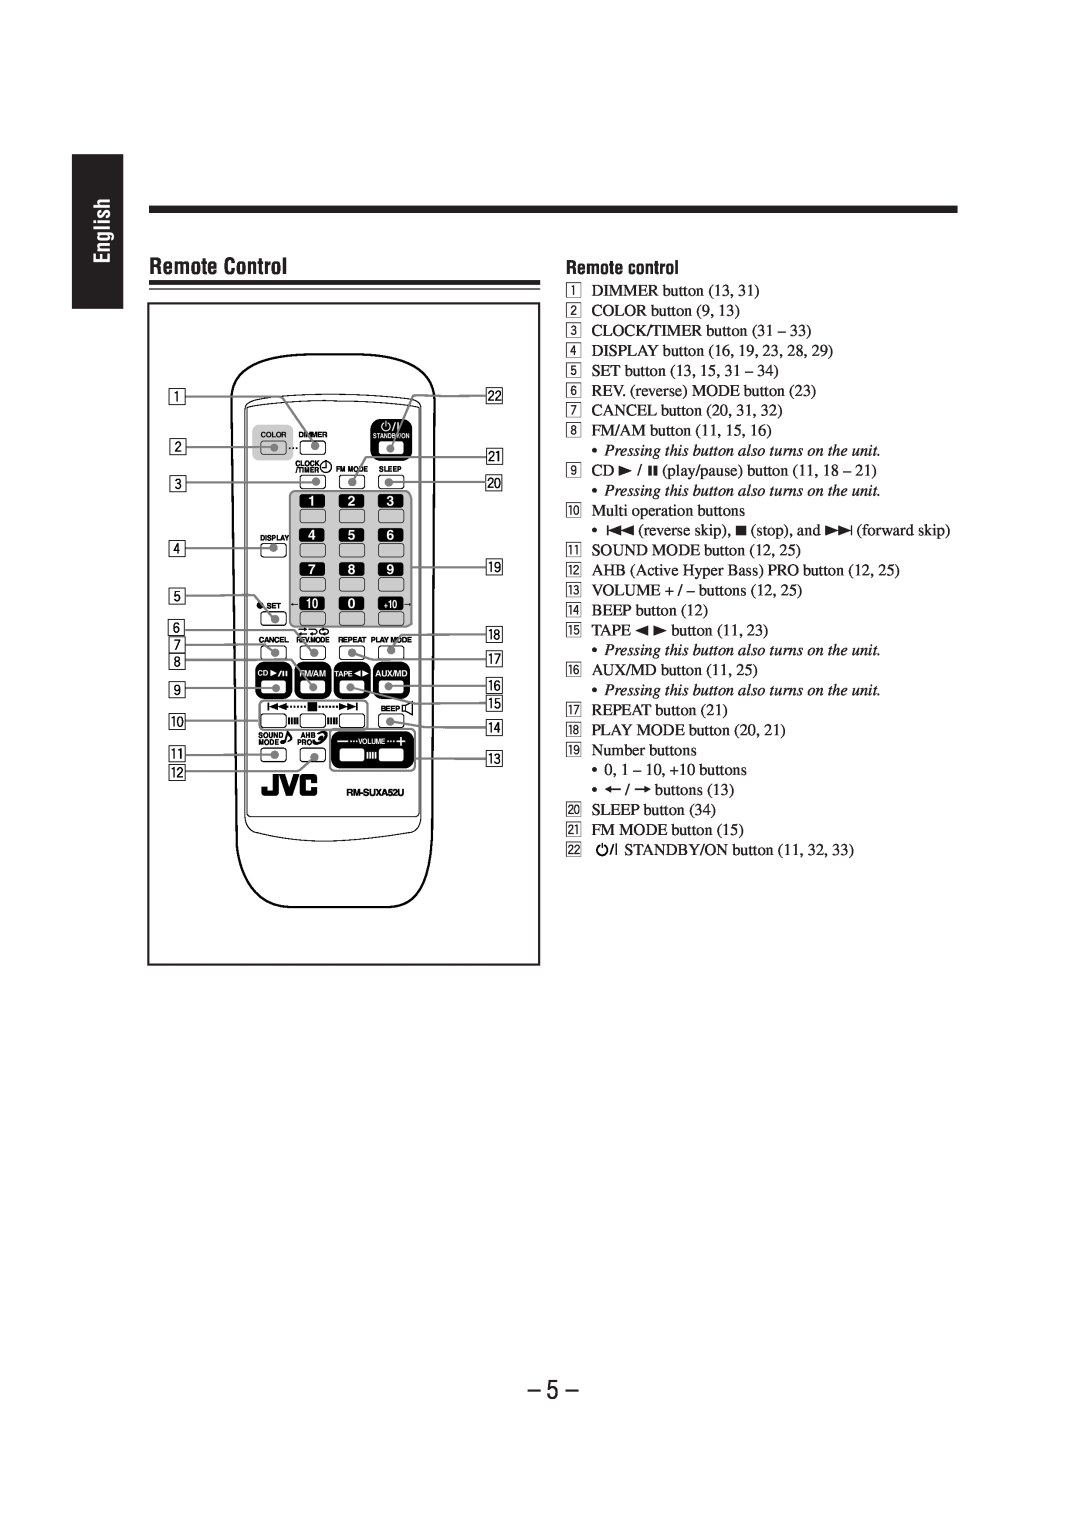 JVC UX-A52 manual English, Remote Control, Remote control 